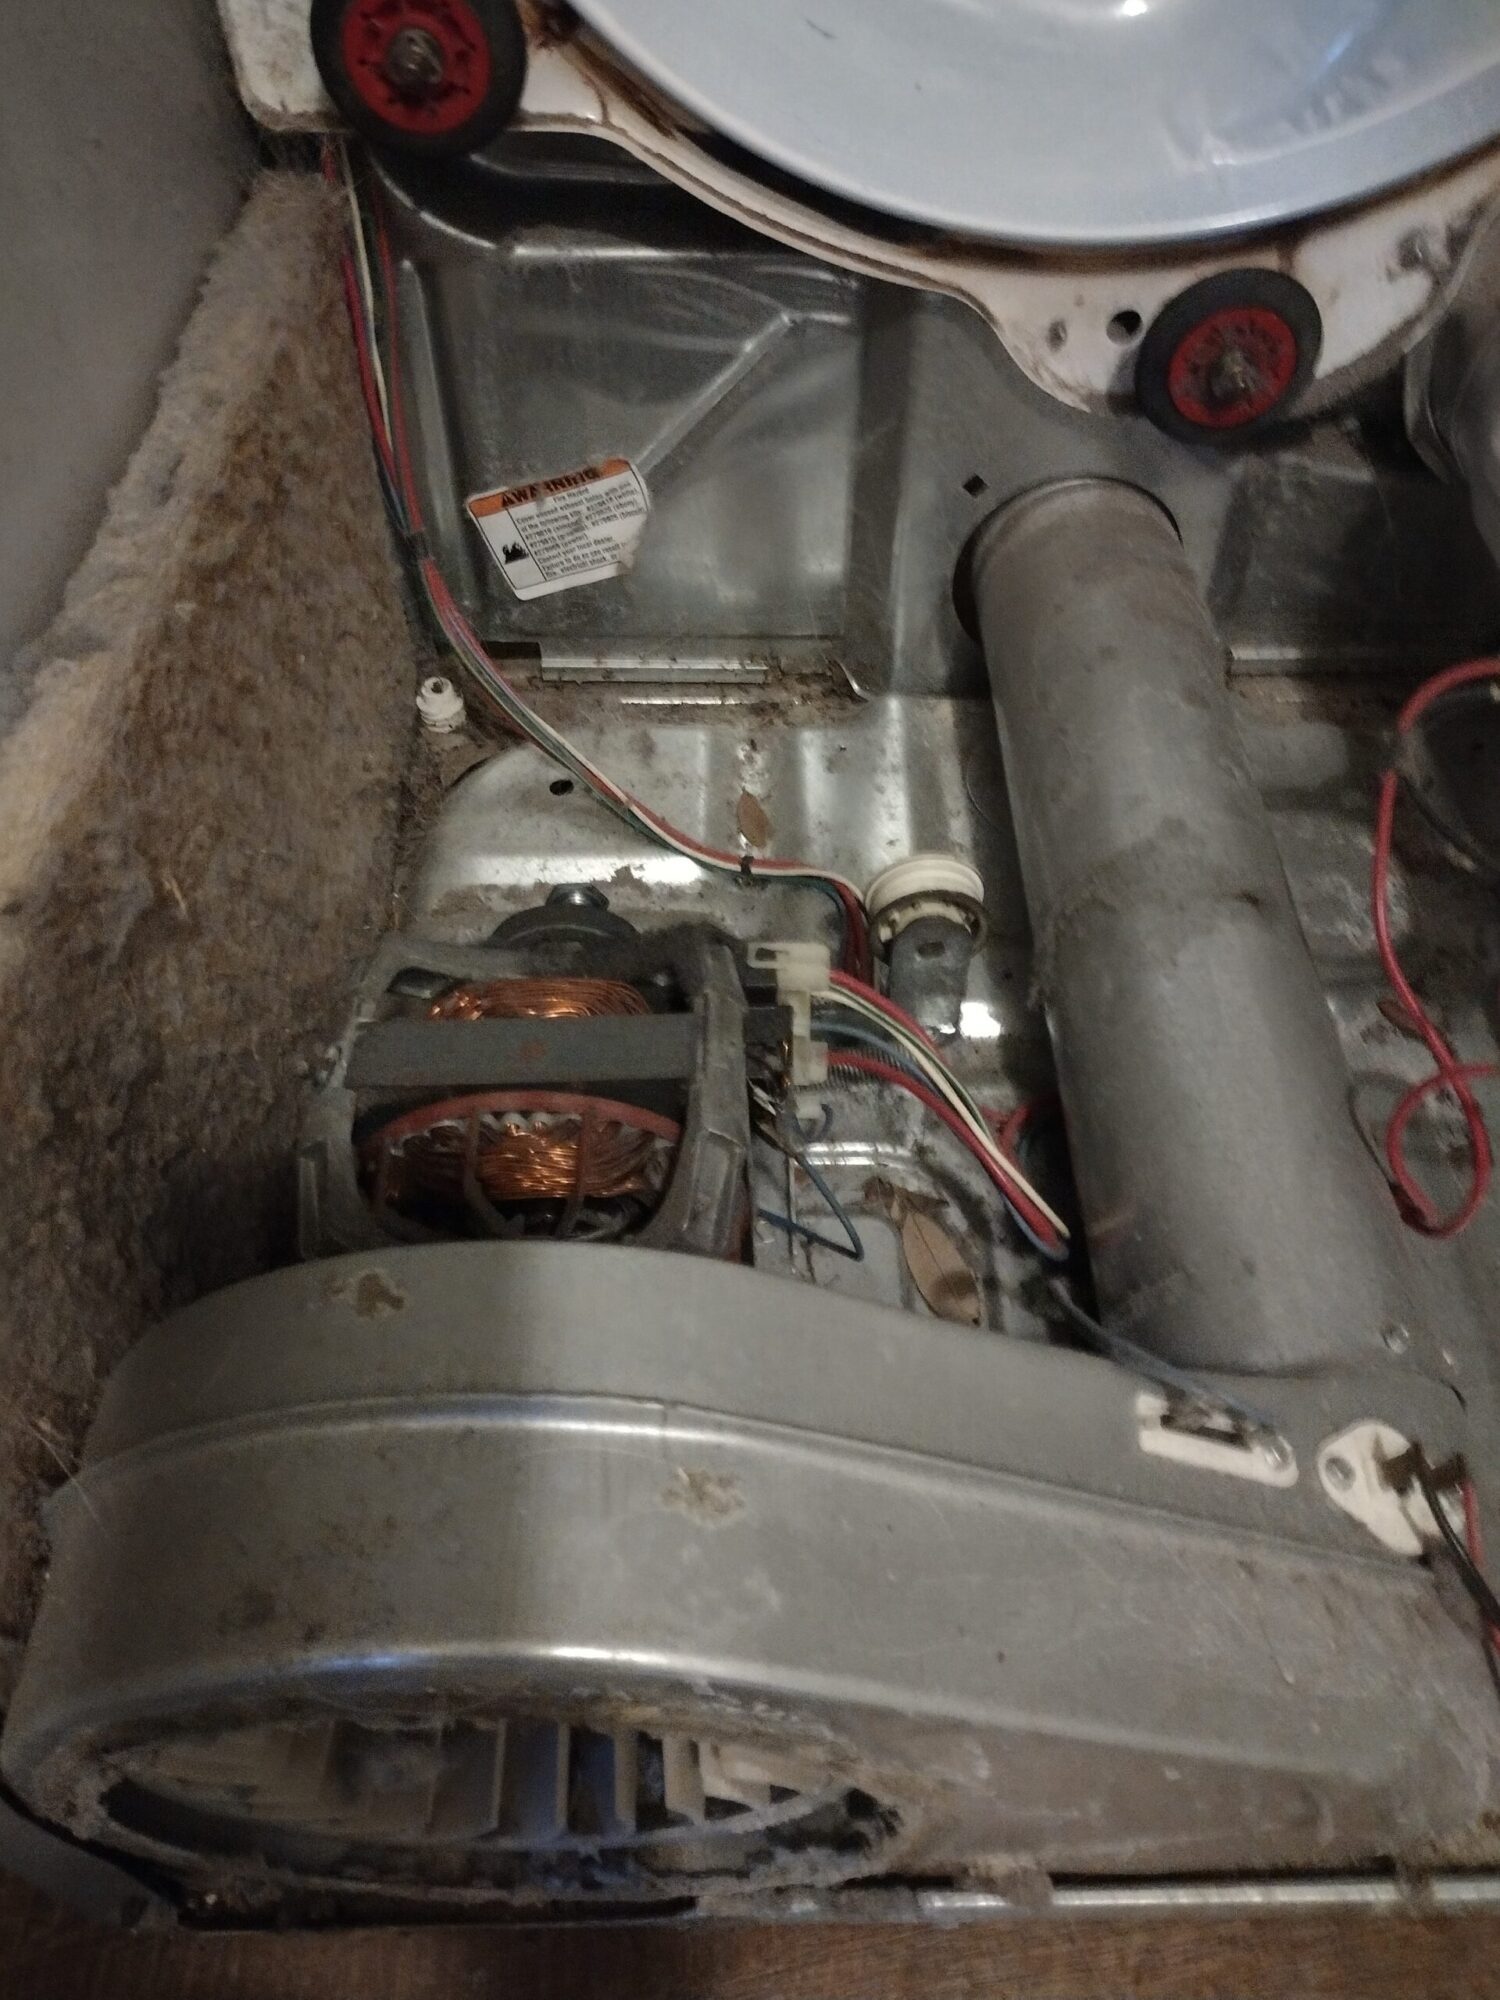 appliance repair dryer repair dryer not turning on nw 28th pl ocala fl 34475